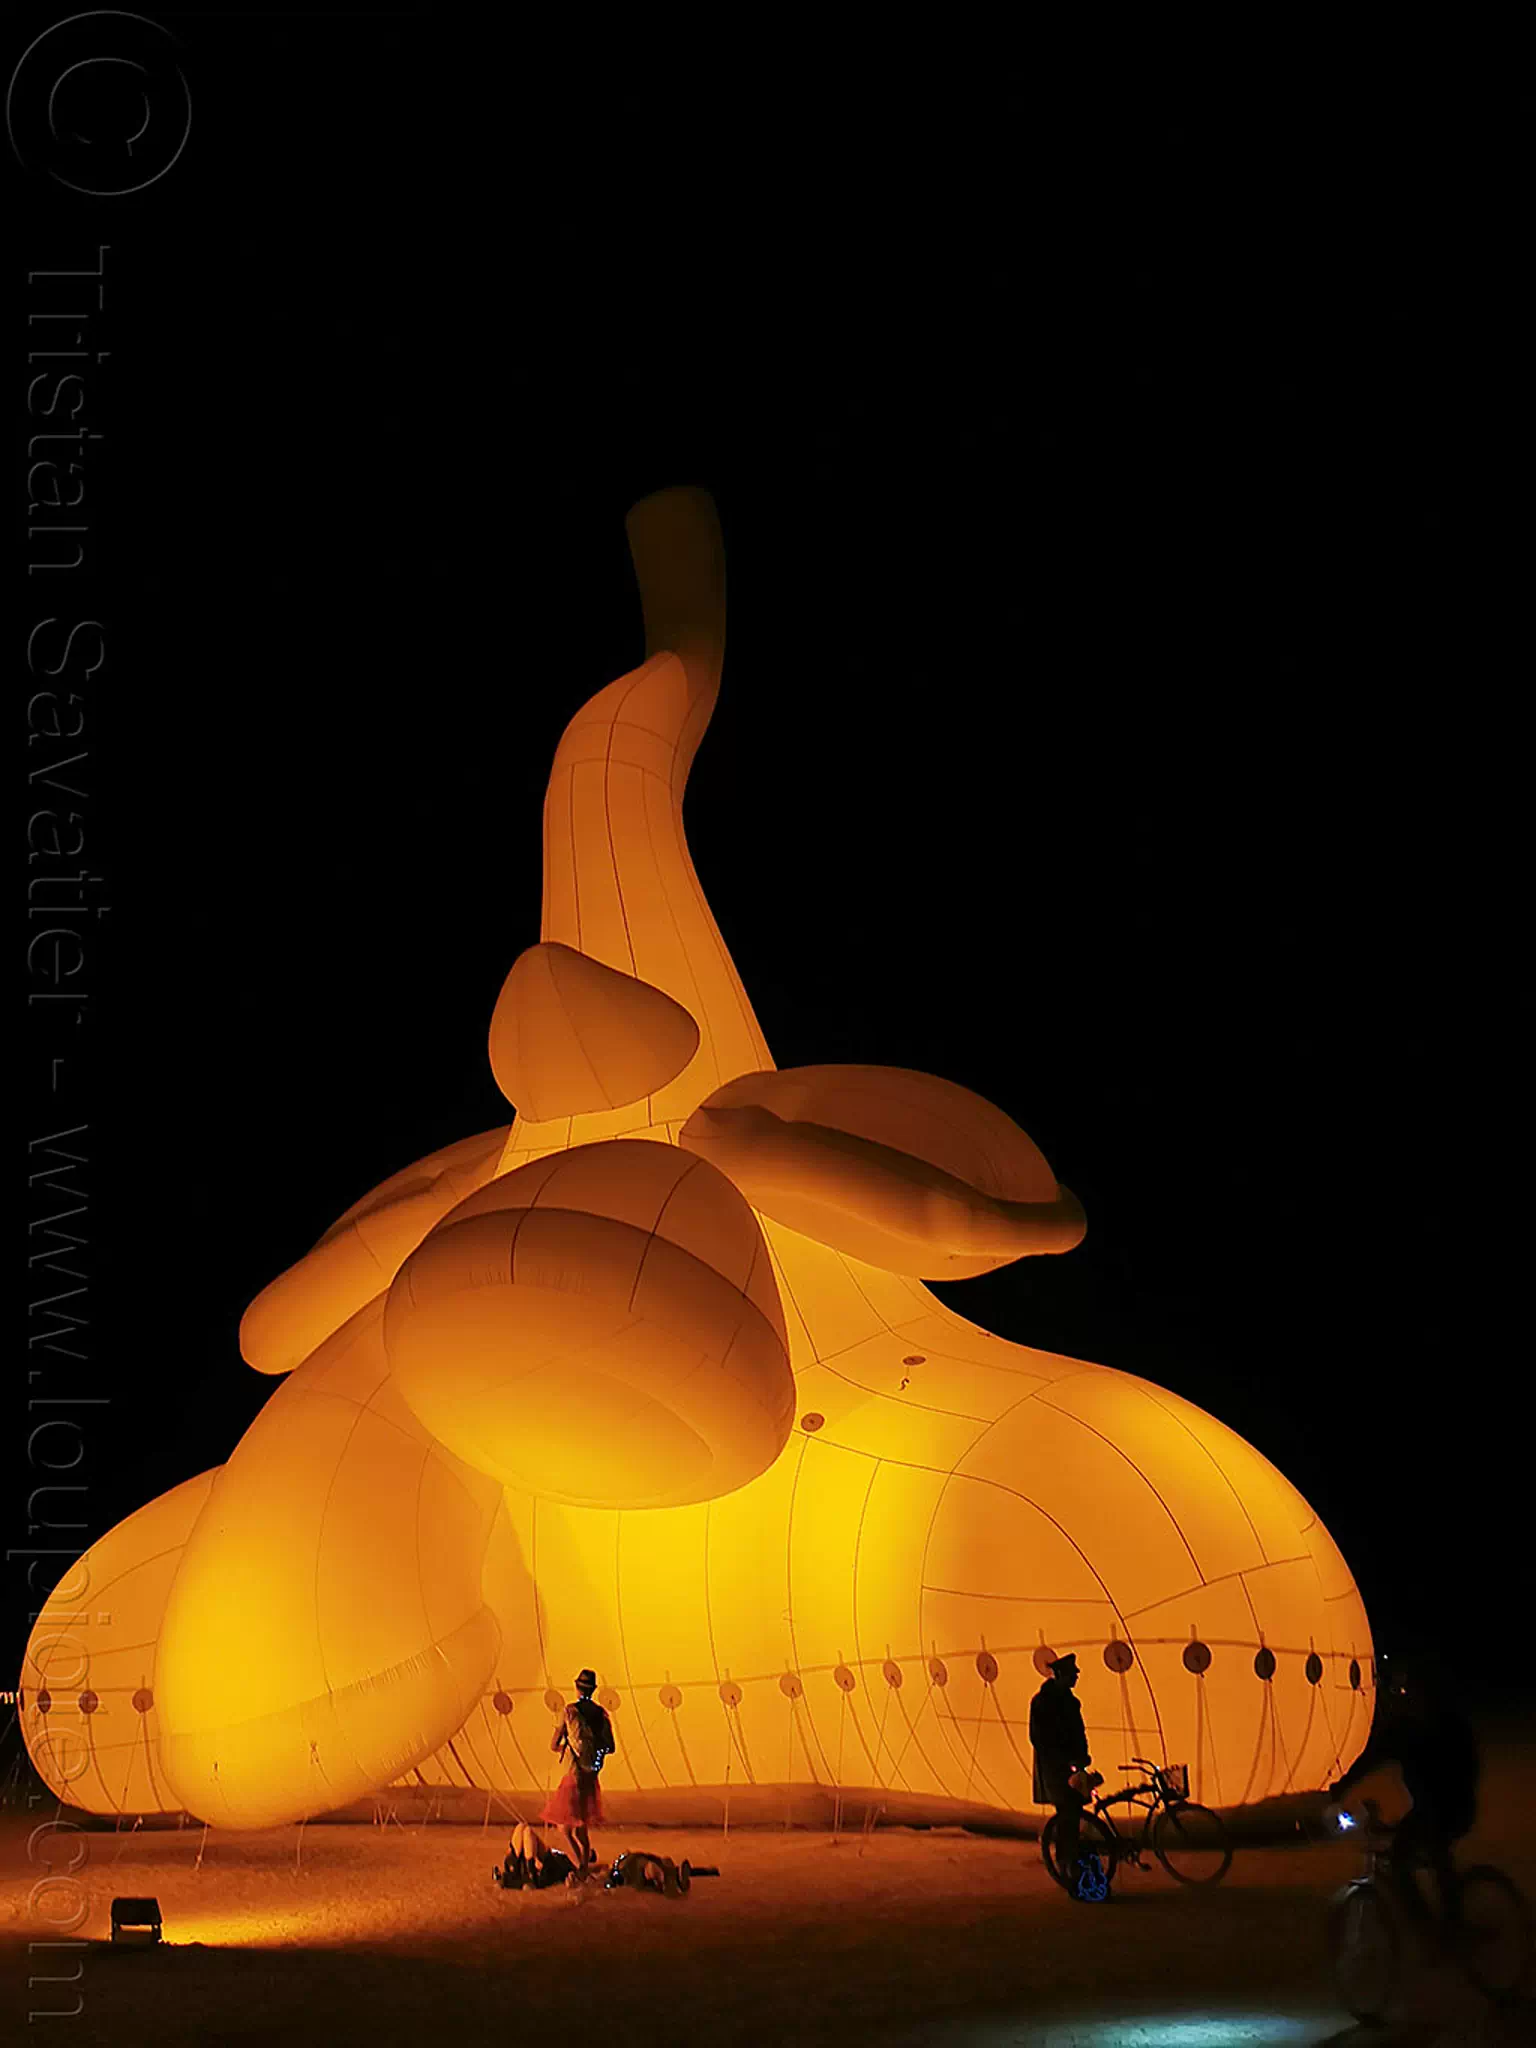 slonik - inflatable elephant - burning man 2019, art installation, burning man, elephant, glowing, inflatable art, night, sculpture, slonik